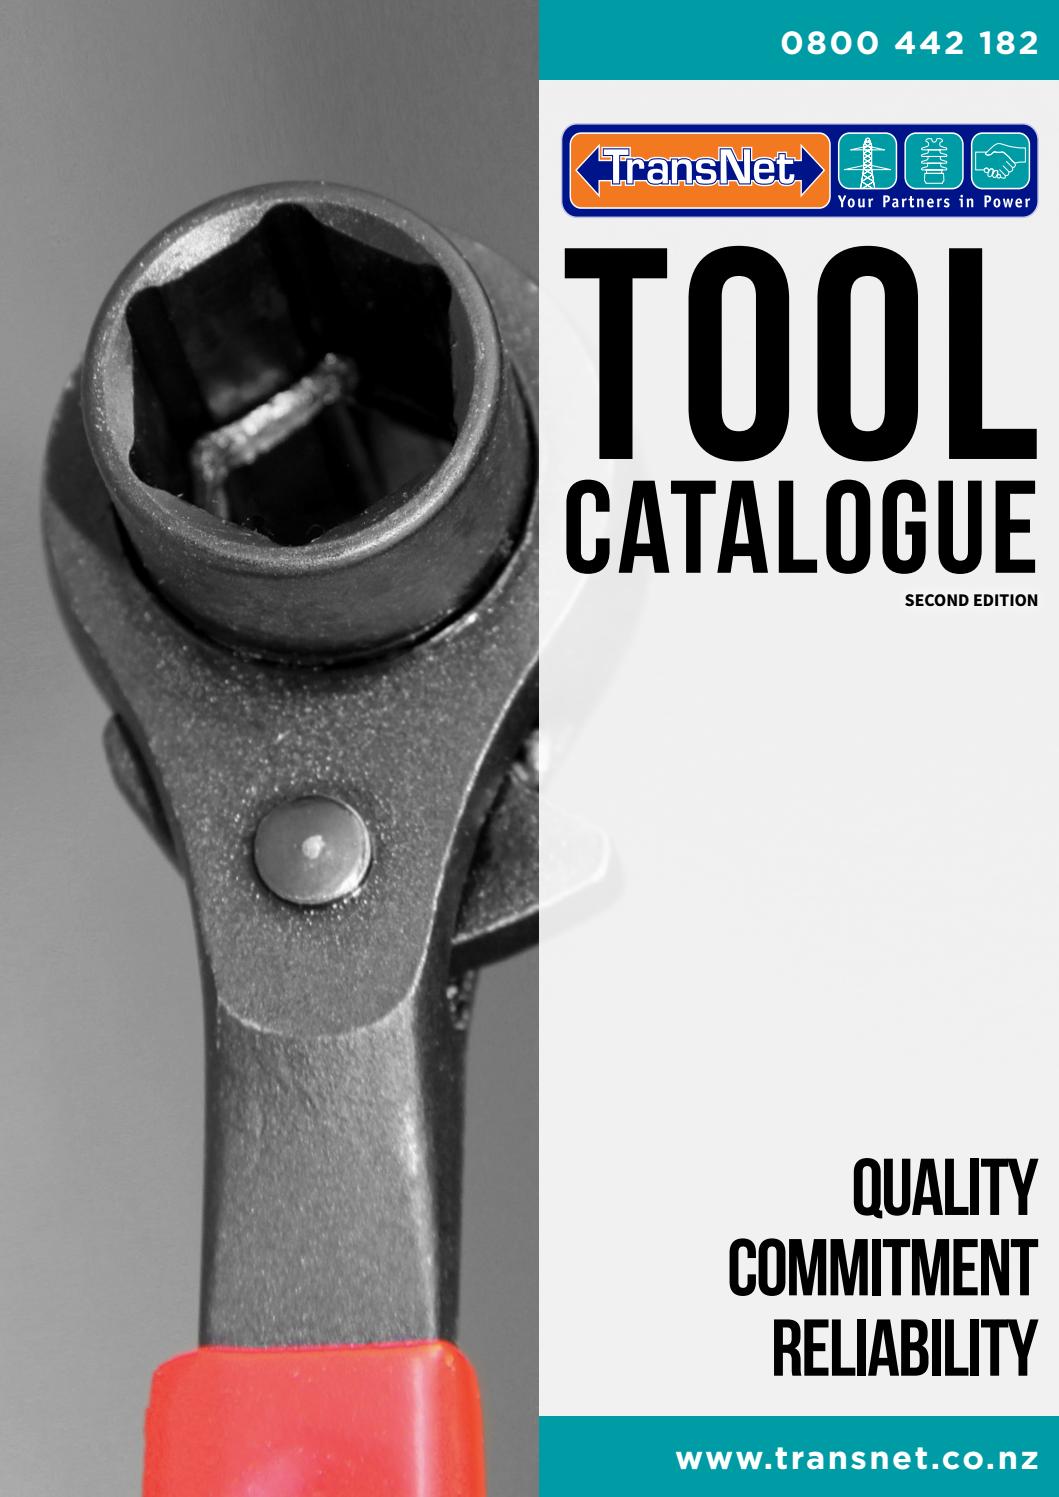 Blow Poke Fireplace tool Unique Transnet Nz Ltd tool Catalogue Second Edition by Transnet